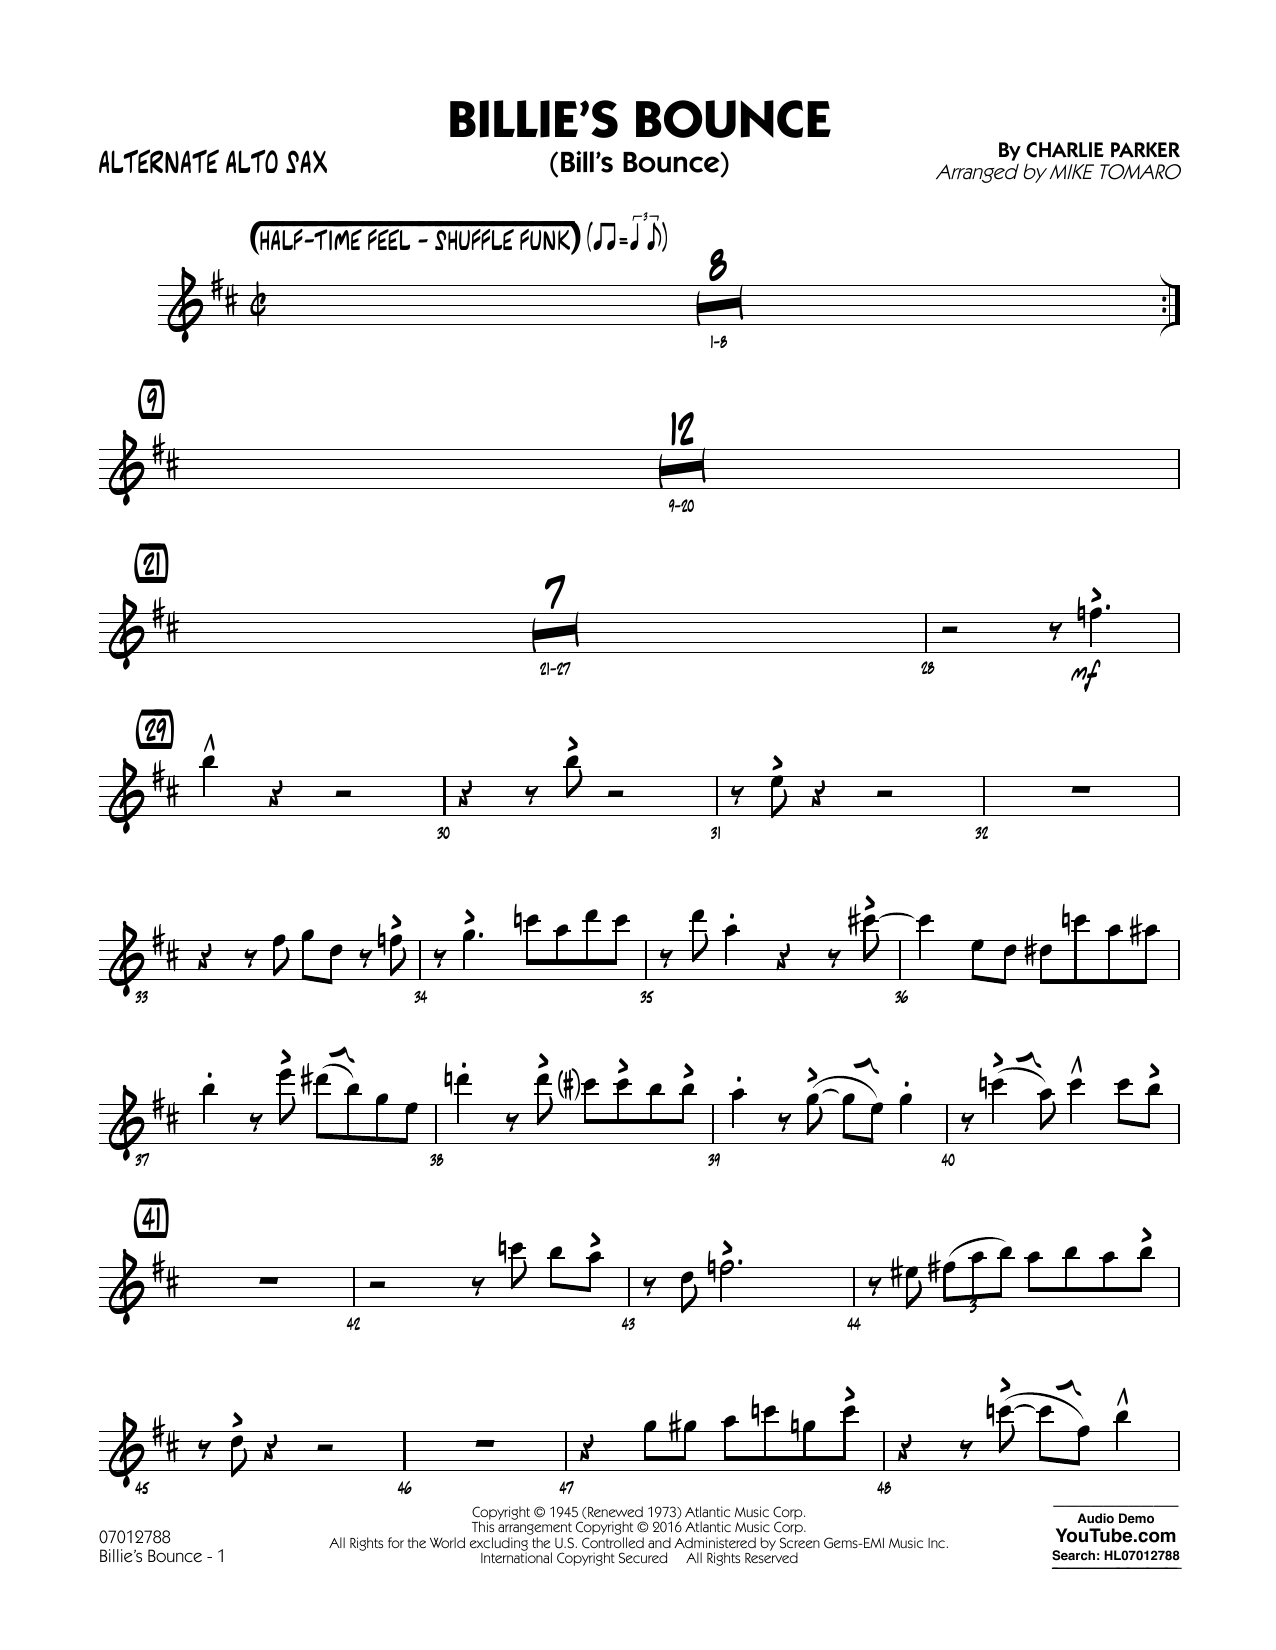 Mike Tomaro Billie's Bounce - Alternate Alto Sax Sheet Music Notes & Chords for Jazz Ensemble - Download or Print PDF